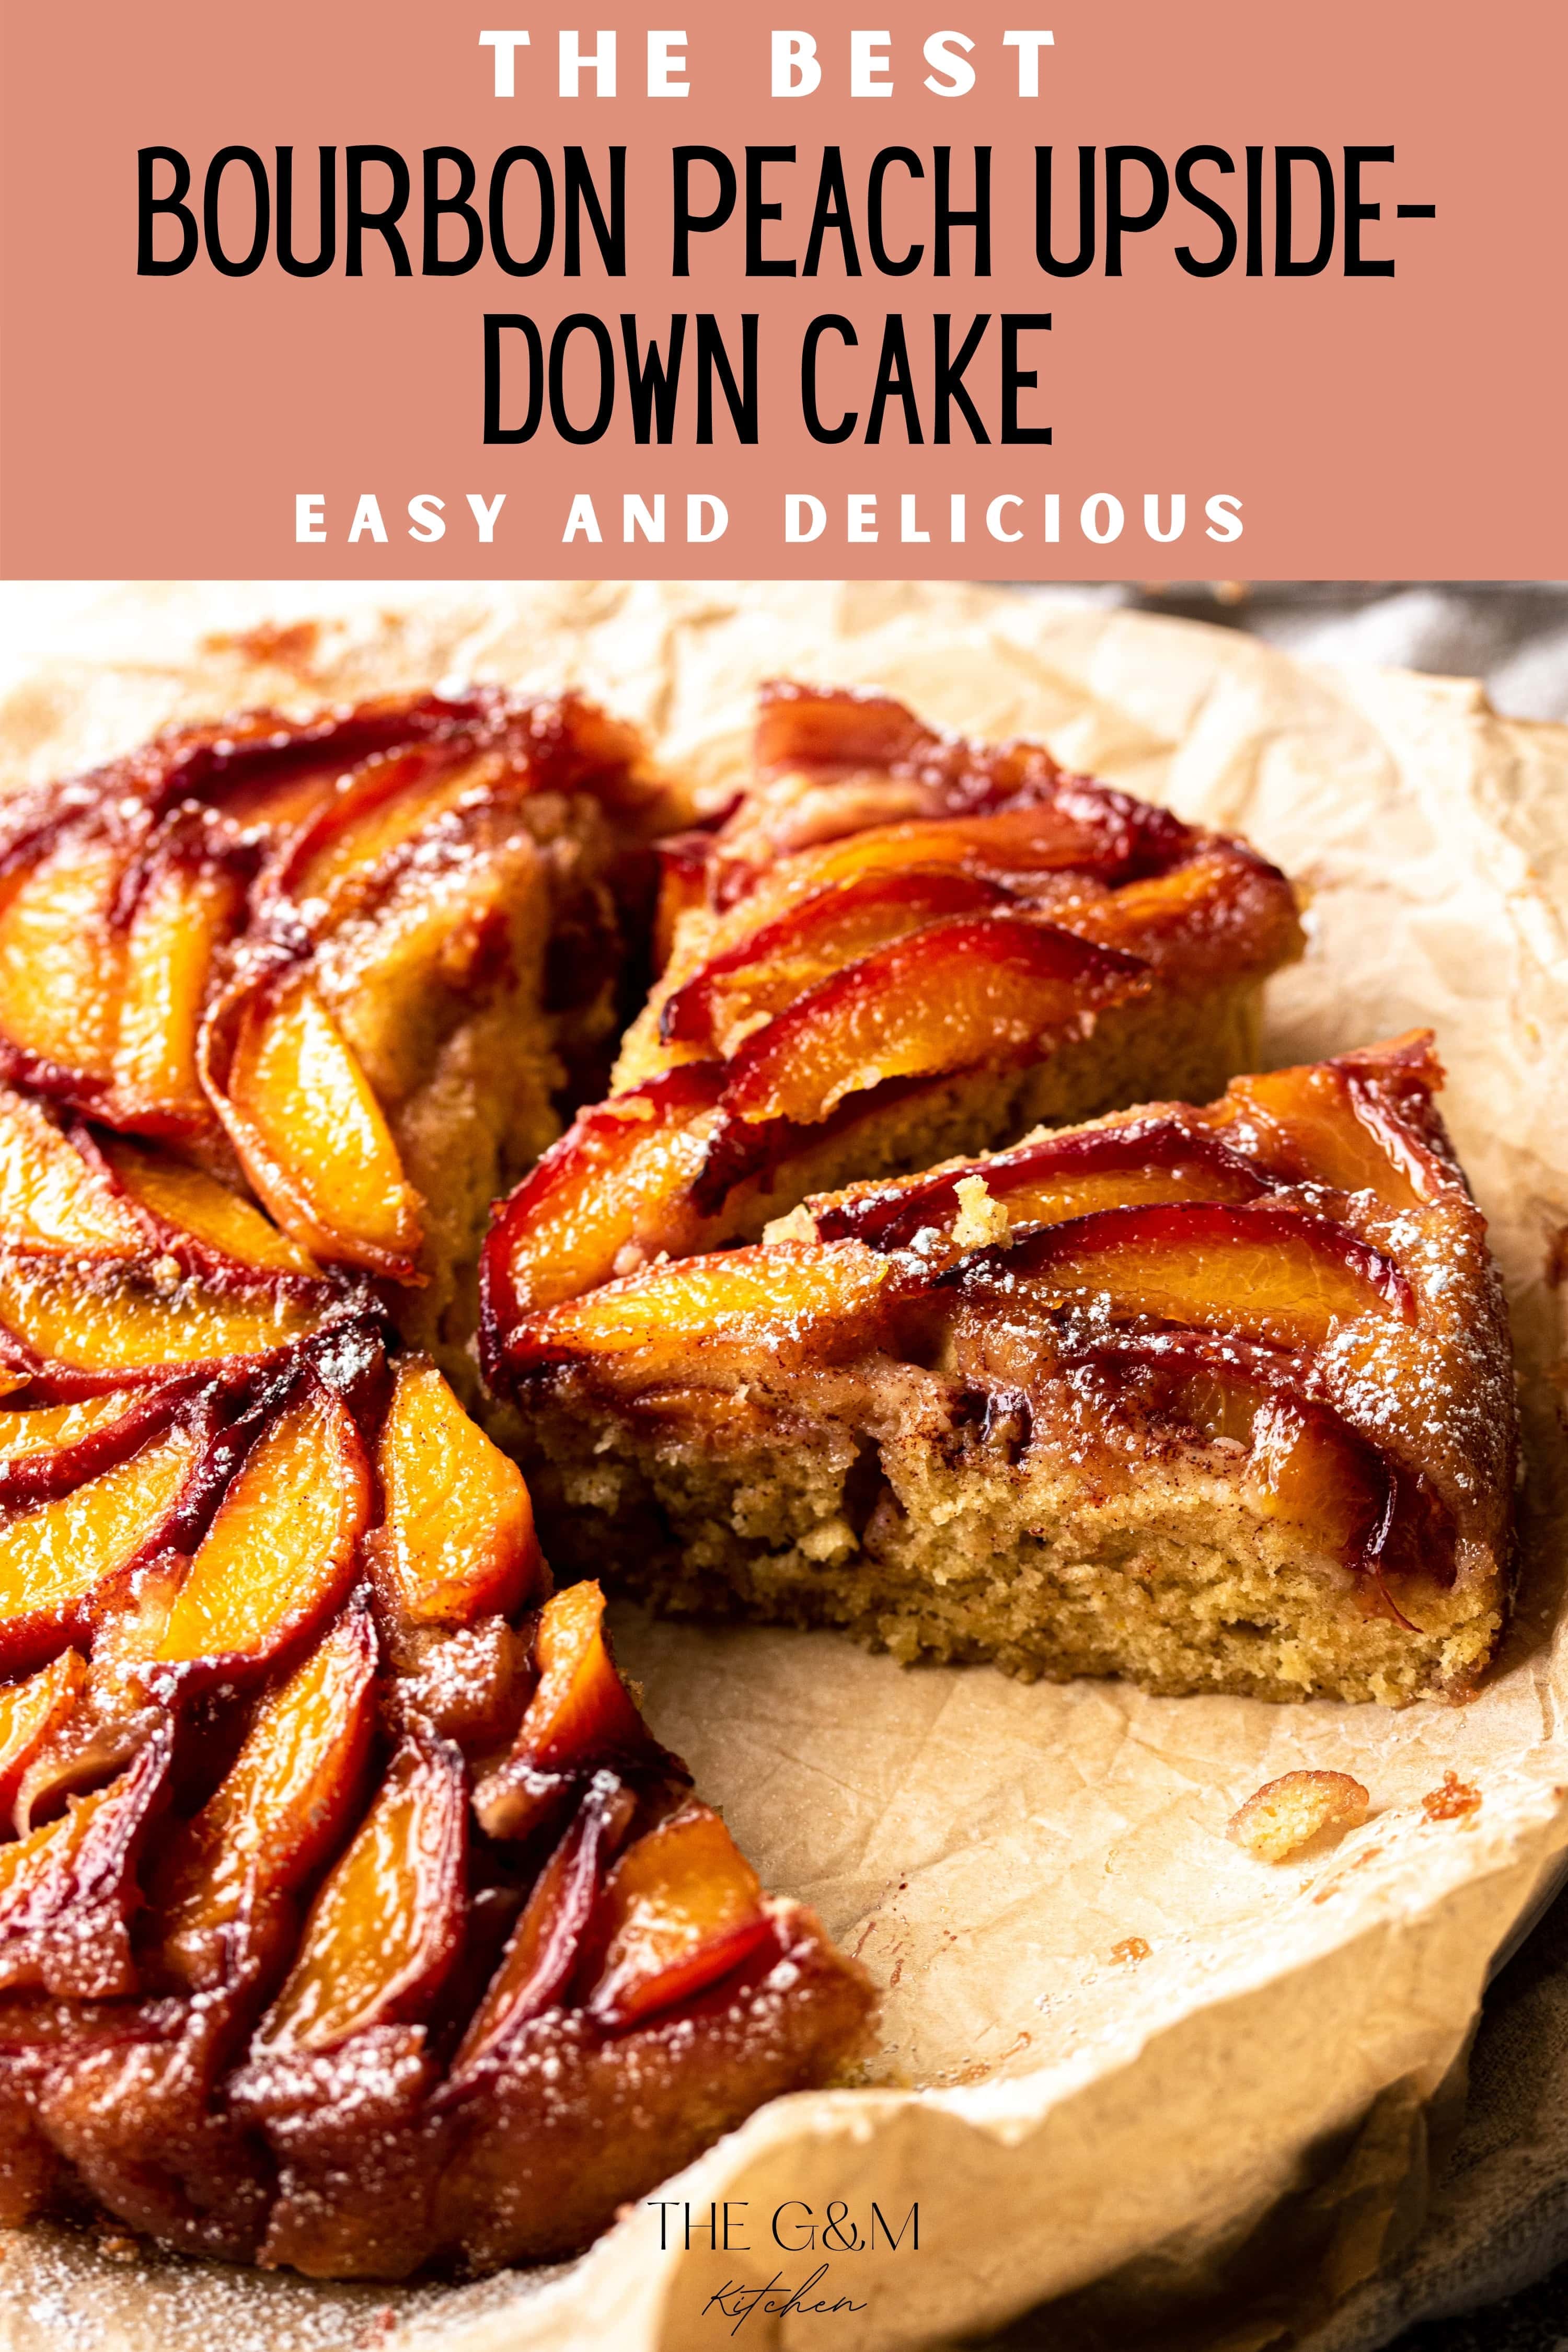 Bourbon Peach Upside Down Cake - The G & M Kitchen